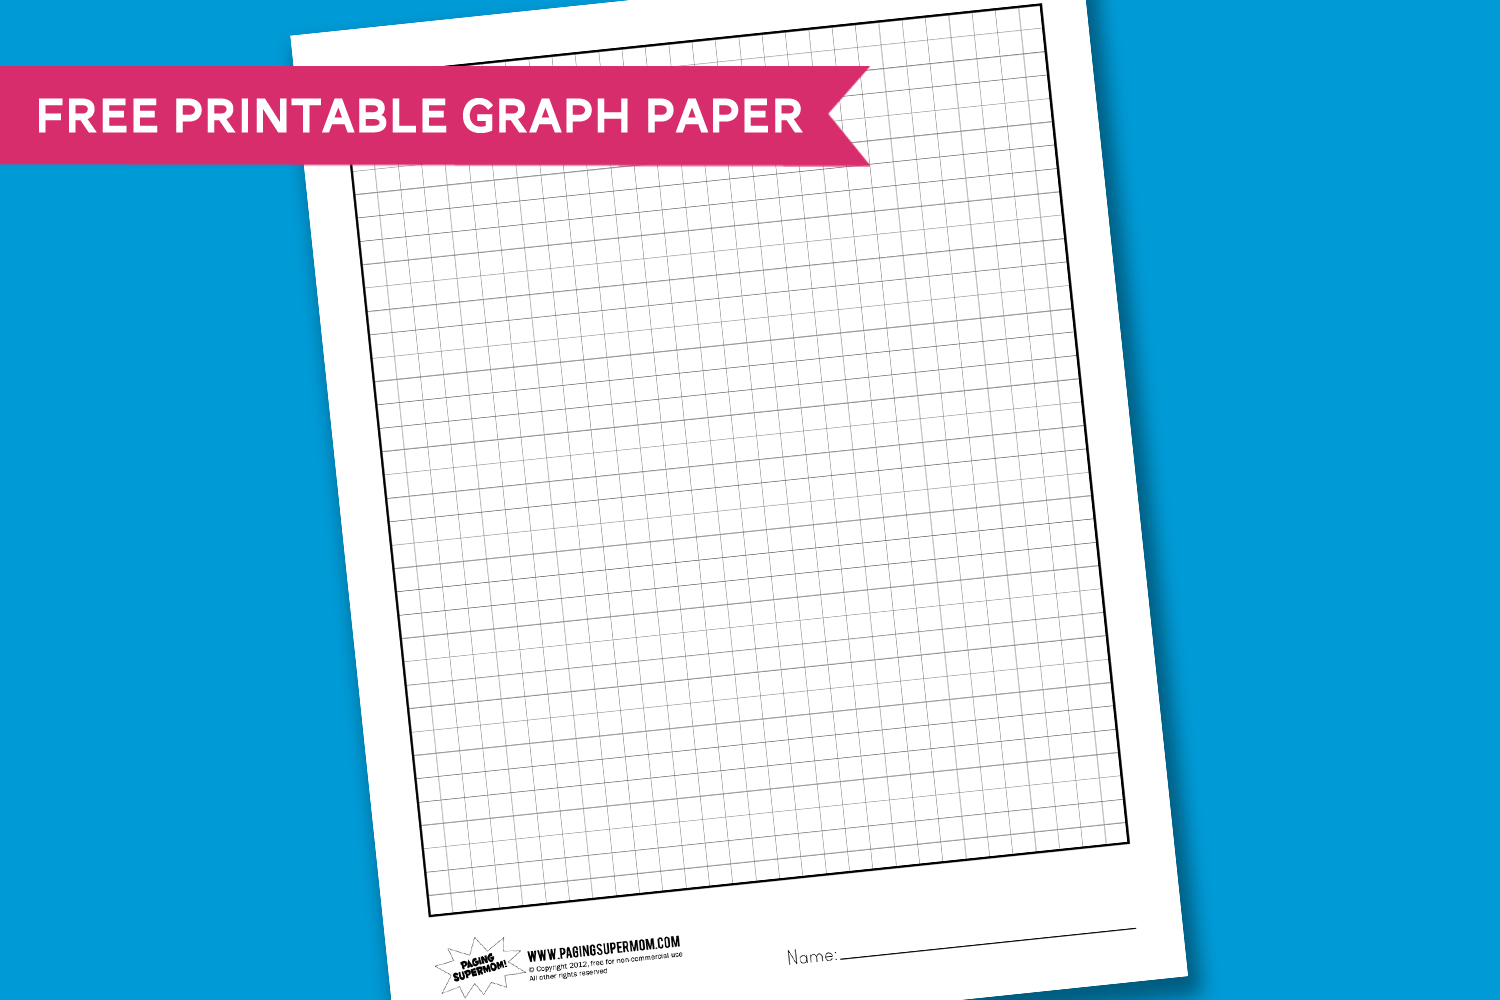 Worksheet Wednesday: Graph Paper | Glam | Pinterest | Graph Paper - Free Printable Graph Paper For Elementary Students